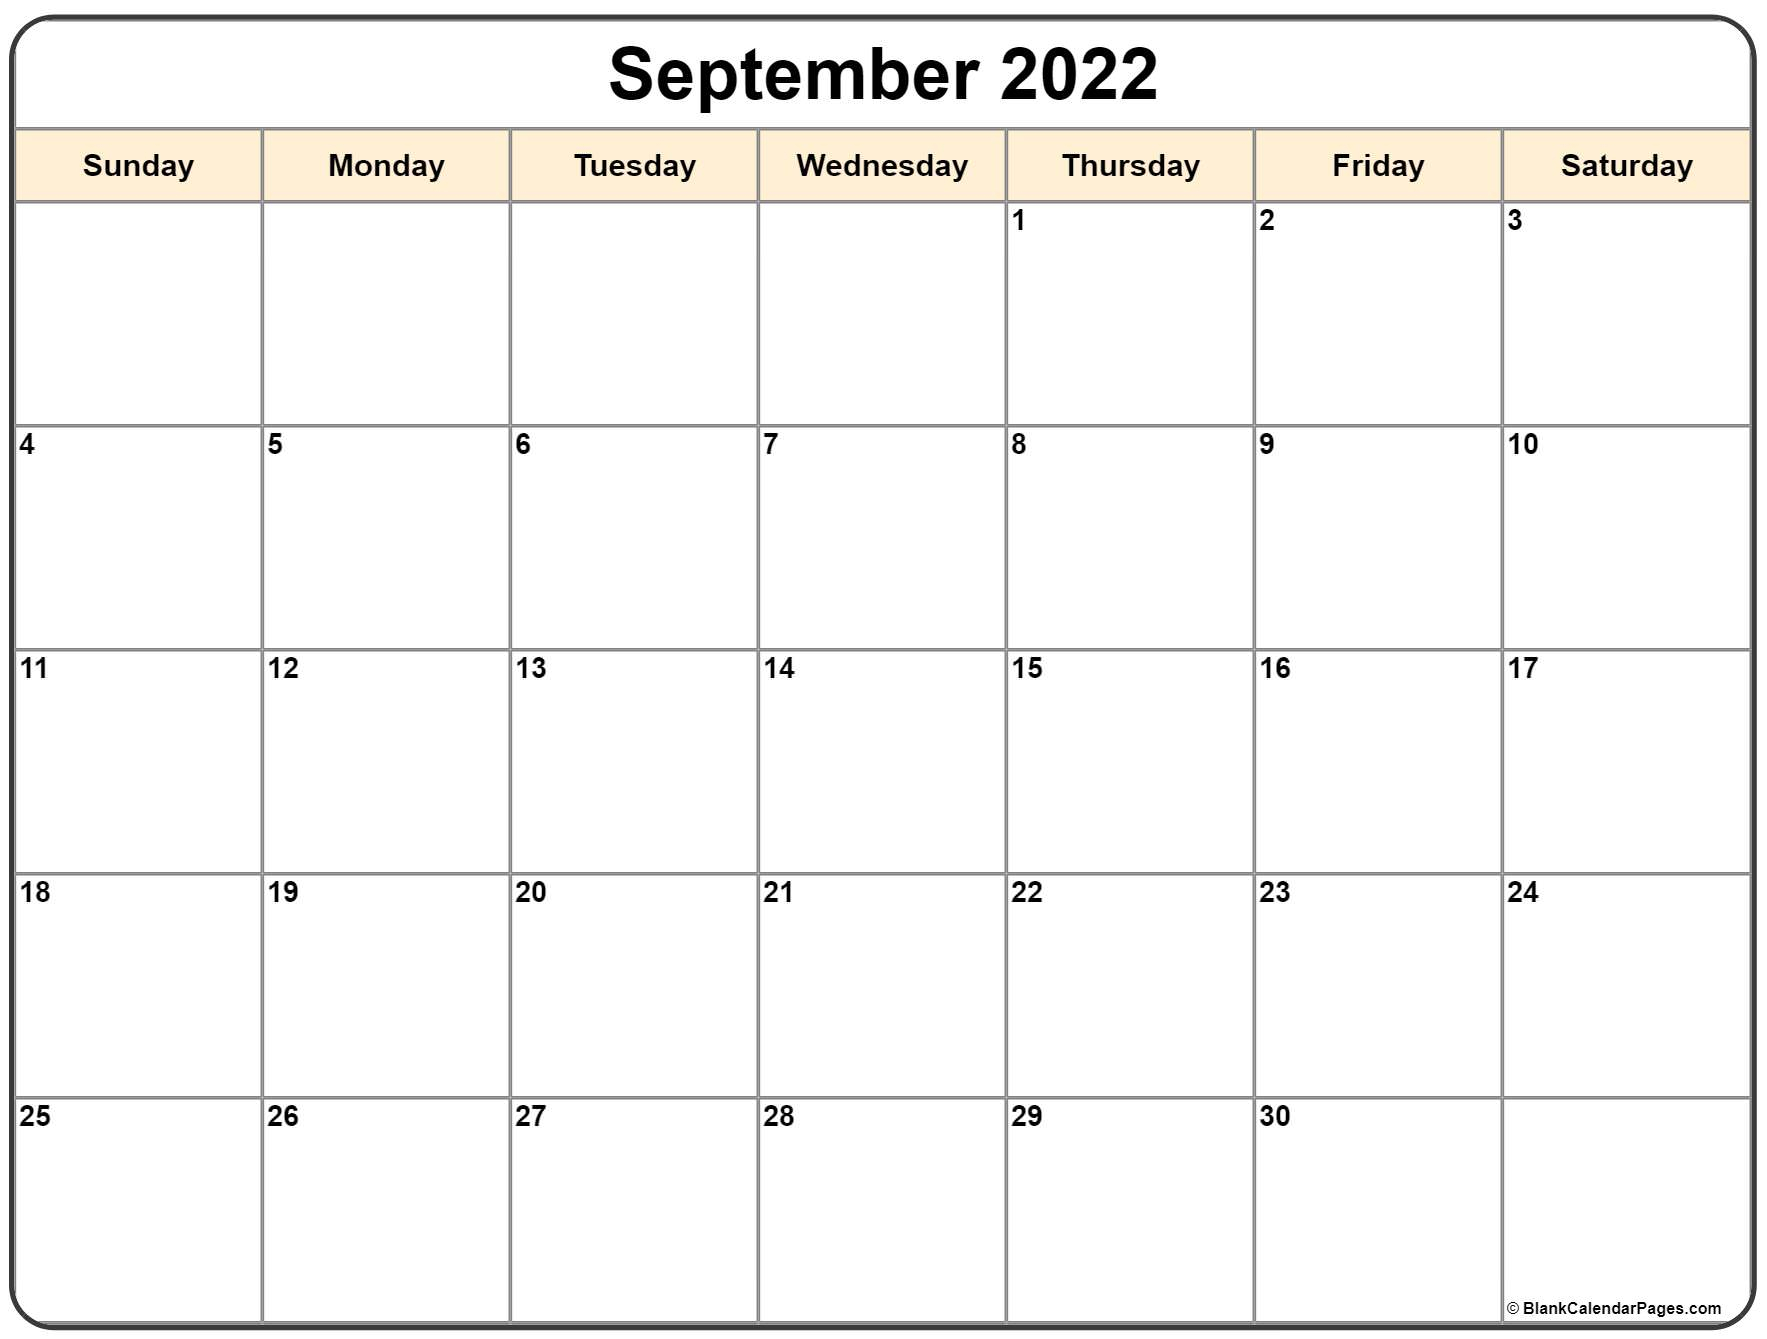 September 2022 Calendar | Free Printable Monthly Calendars with Calendar September 2022 To August 2022